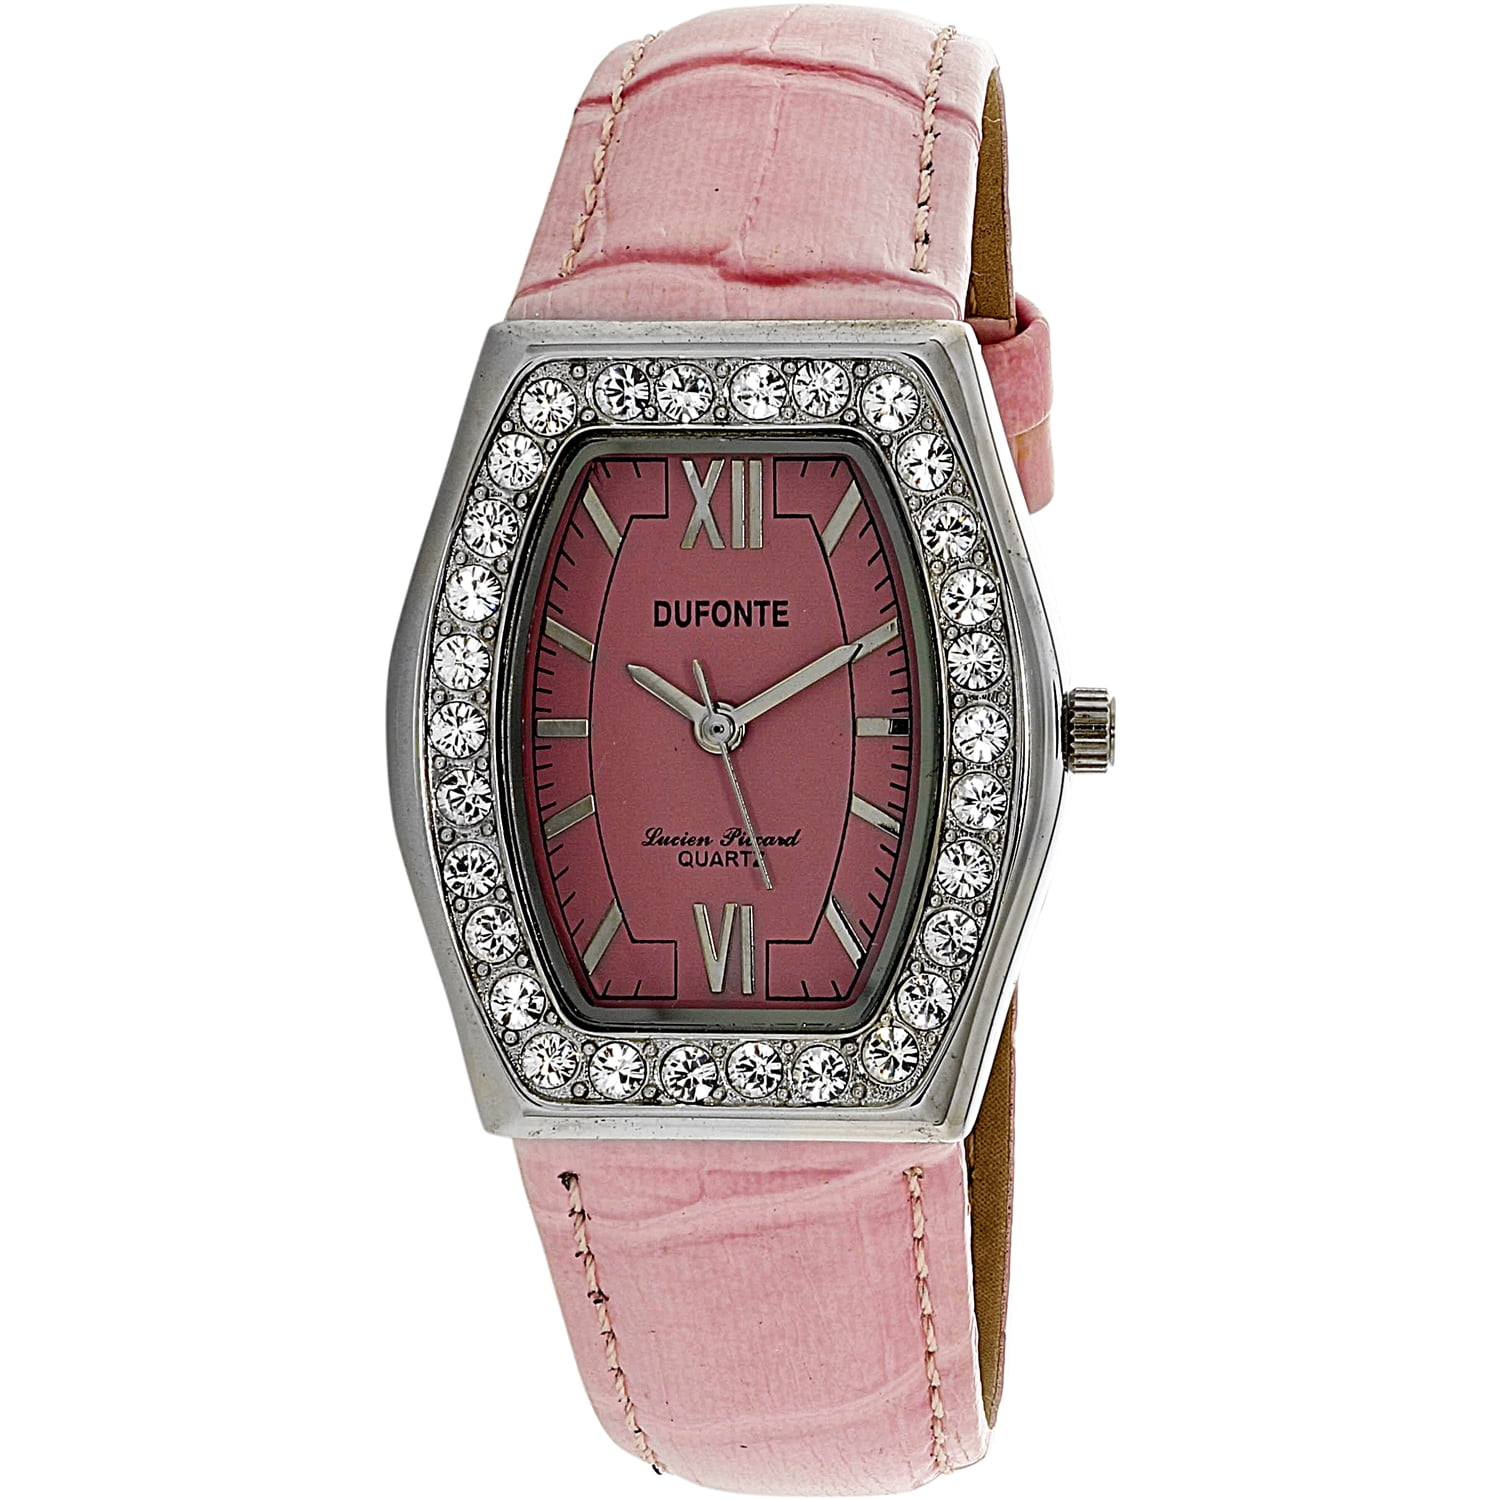 Dufonte - Dufonte Women's 727033PK Pink Leather Quartz Fashion Watch ...